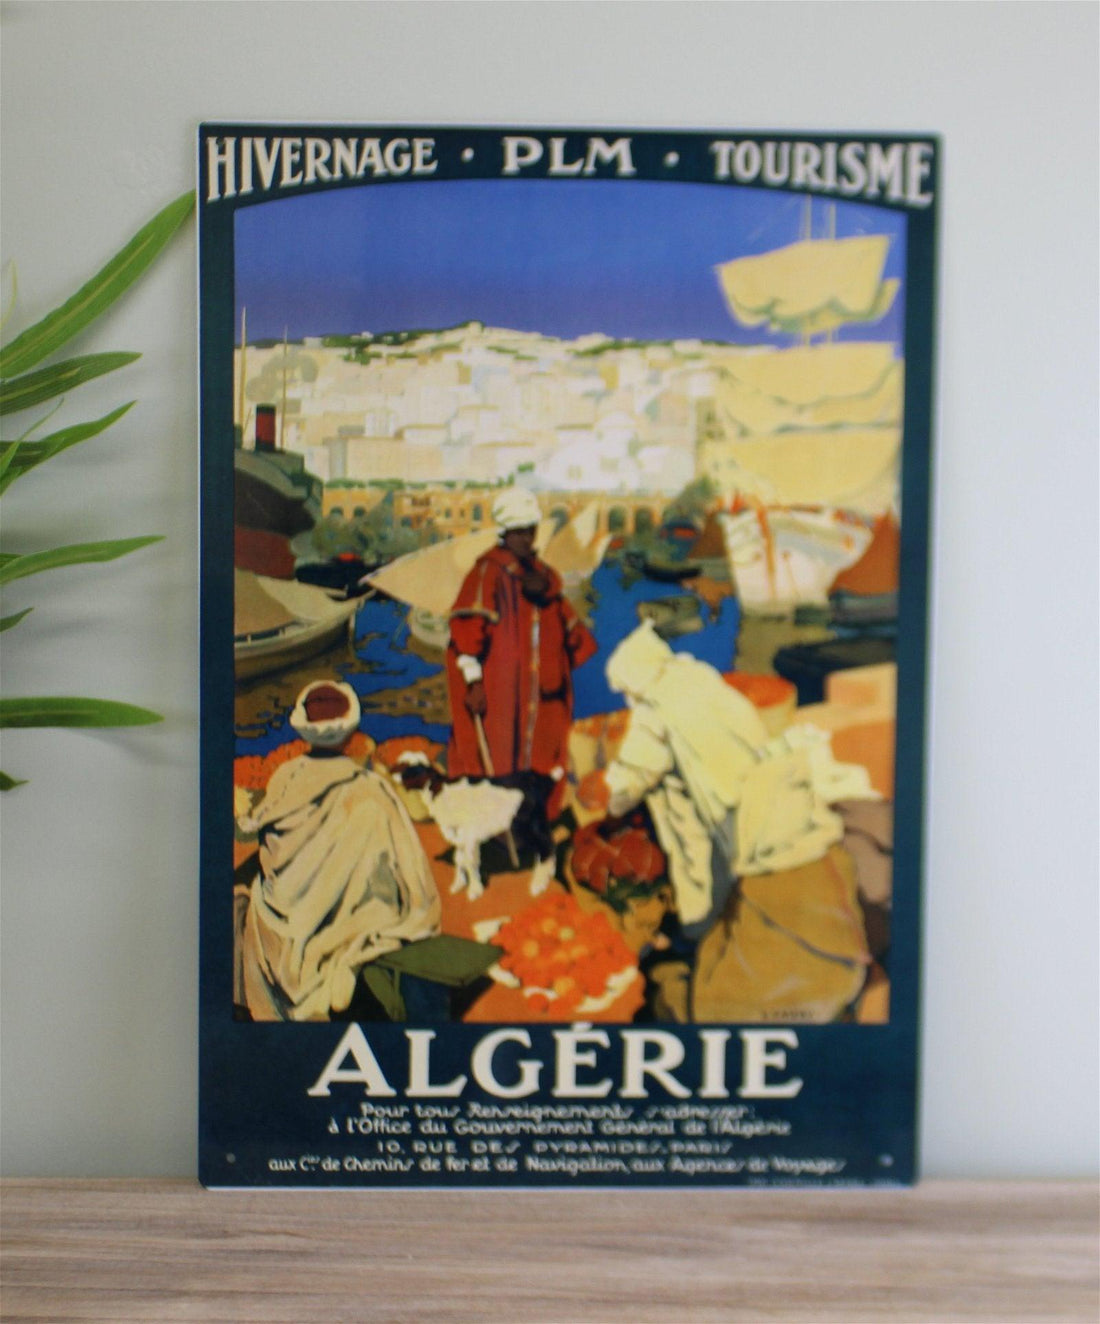 Vintage Metal Sign - Retro Advertising - Algerie Tourism - £27.99 - Retro Advertising 